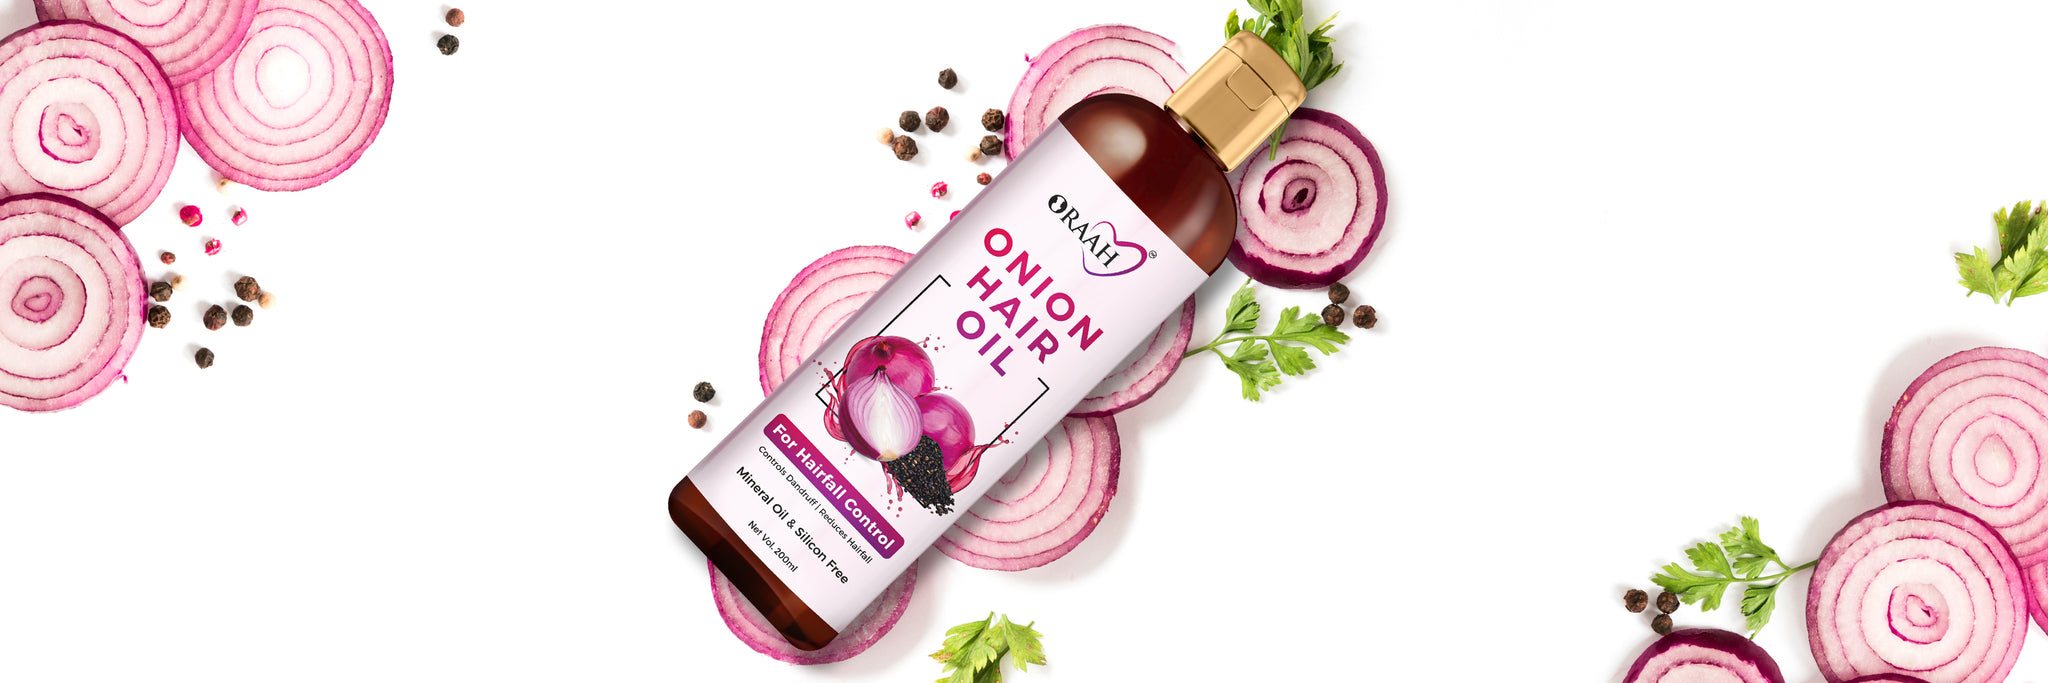 Onion Hair oil for Hair growth